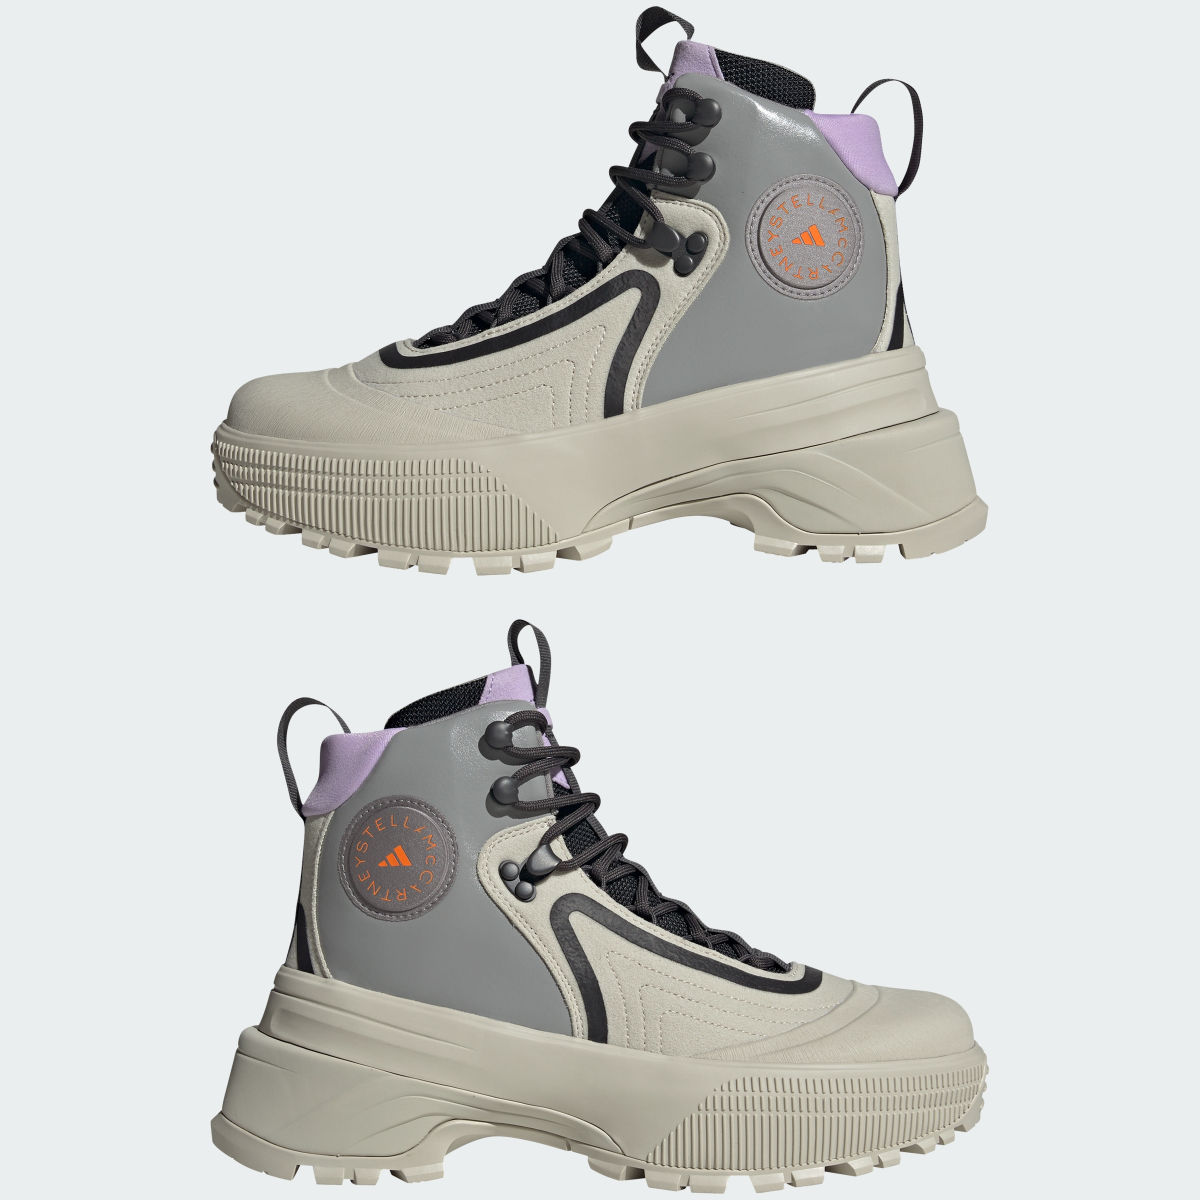 Adidas by Stella McCartney x Terrex Hiking Boots. 13